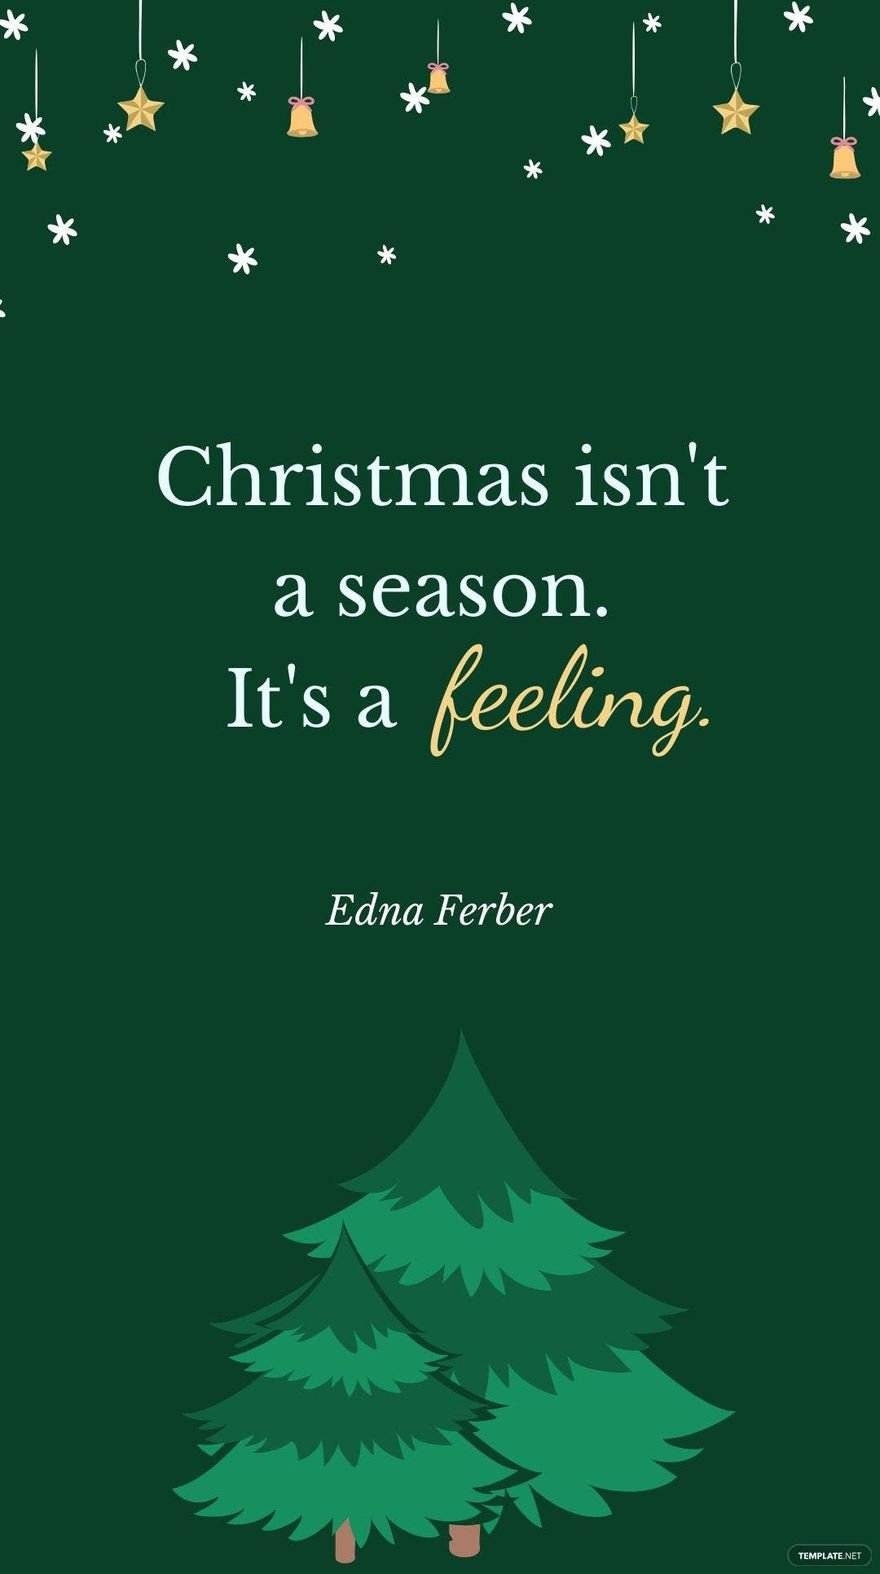 Edna Ferber - Christmas isn't a season. It's a feeling.